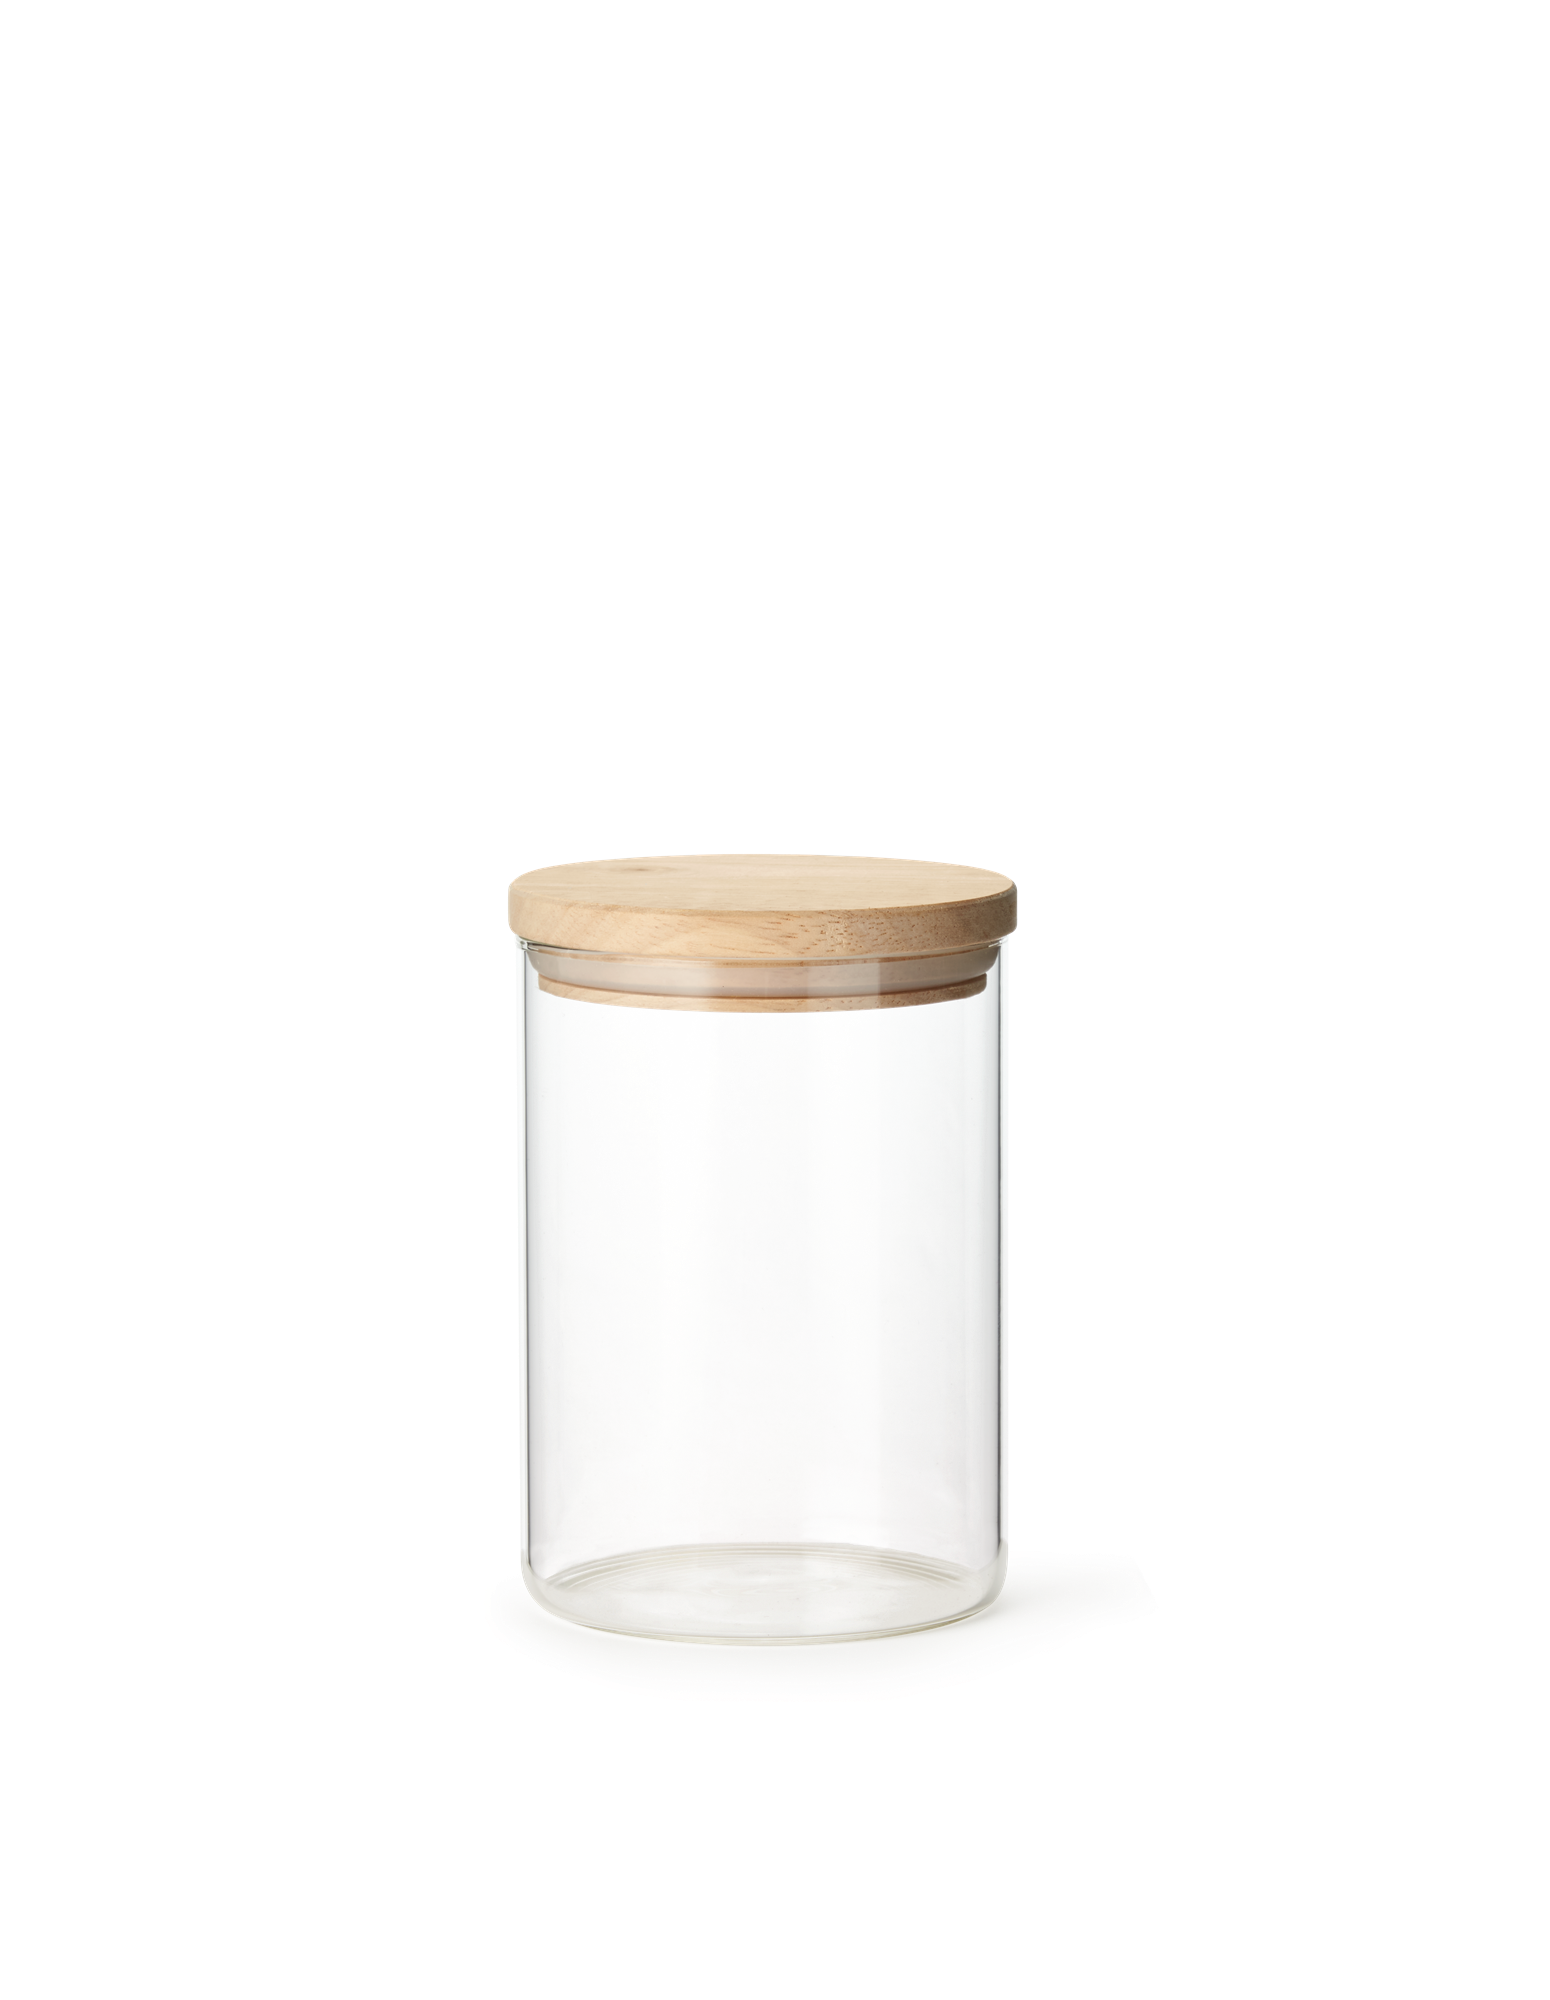 2 x Herevin Kanister Vorratsglas Glasdose Glasbehälter Behälter Teedose Kavanoz 